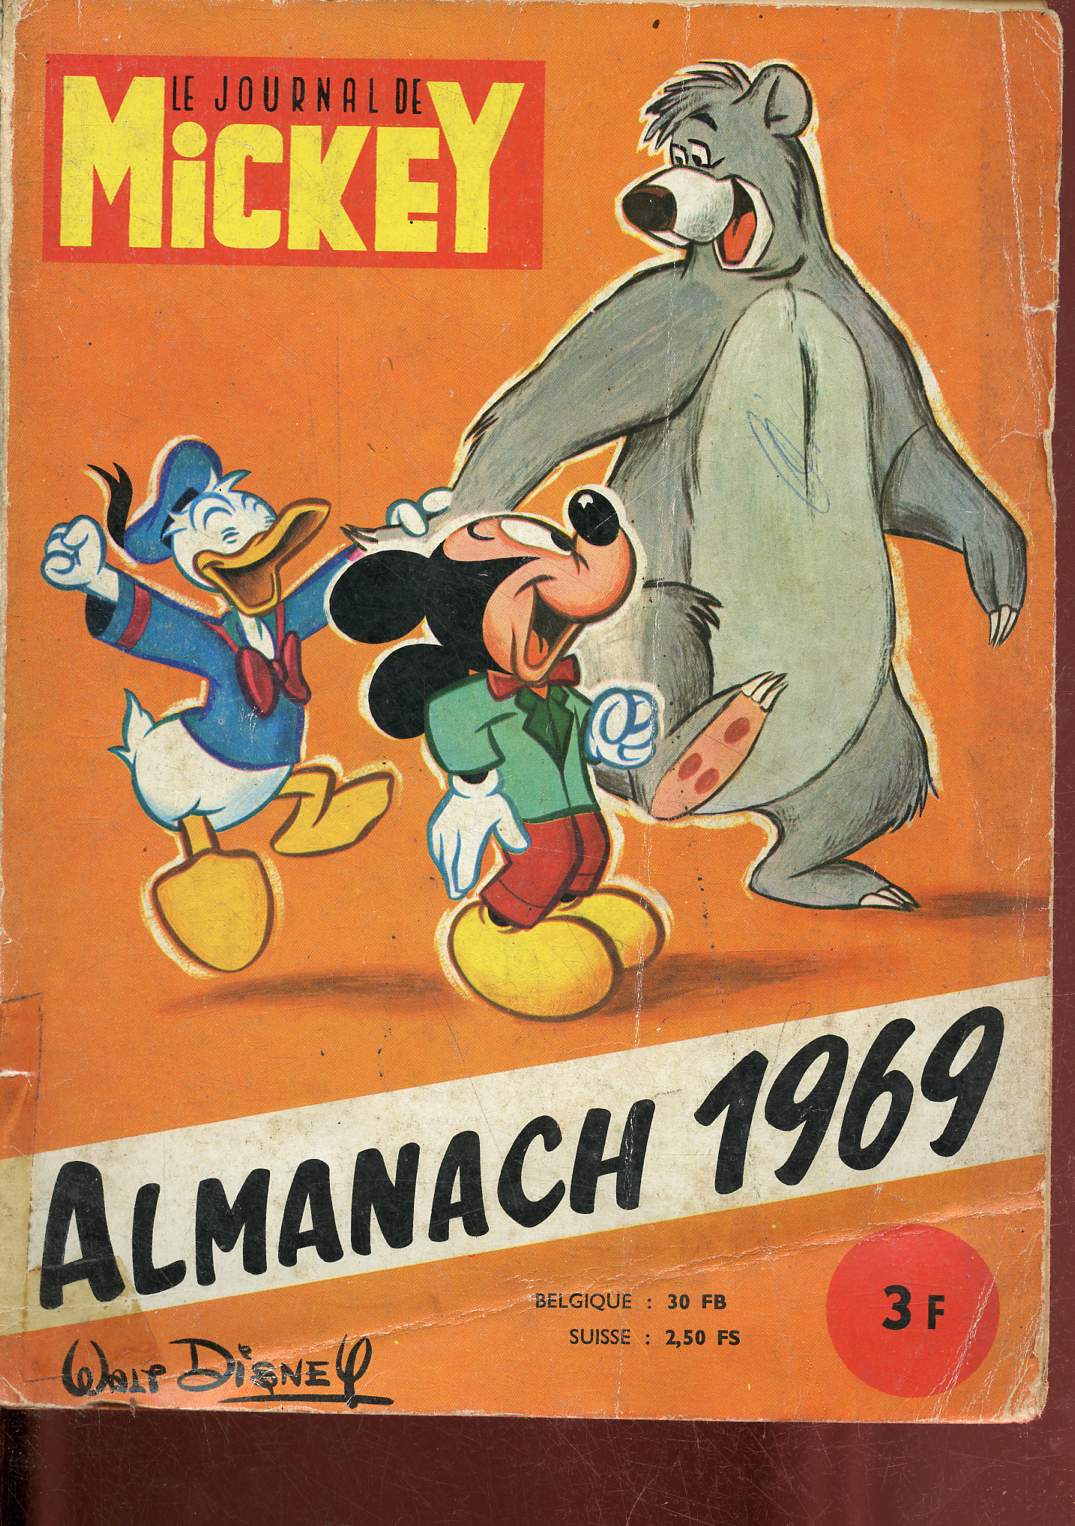 Le journal de Mickey Almanach 1969 - incomplet.